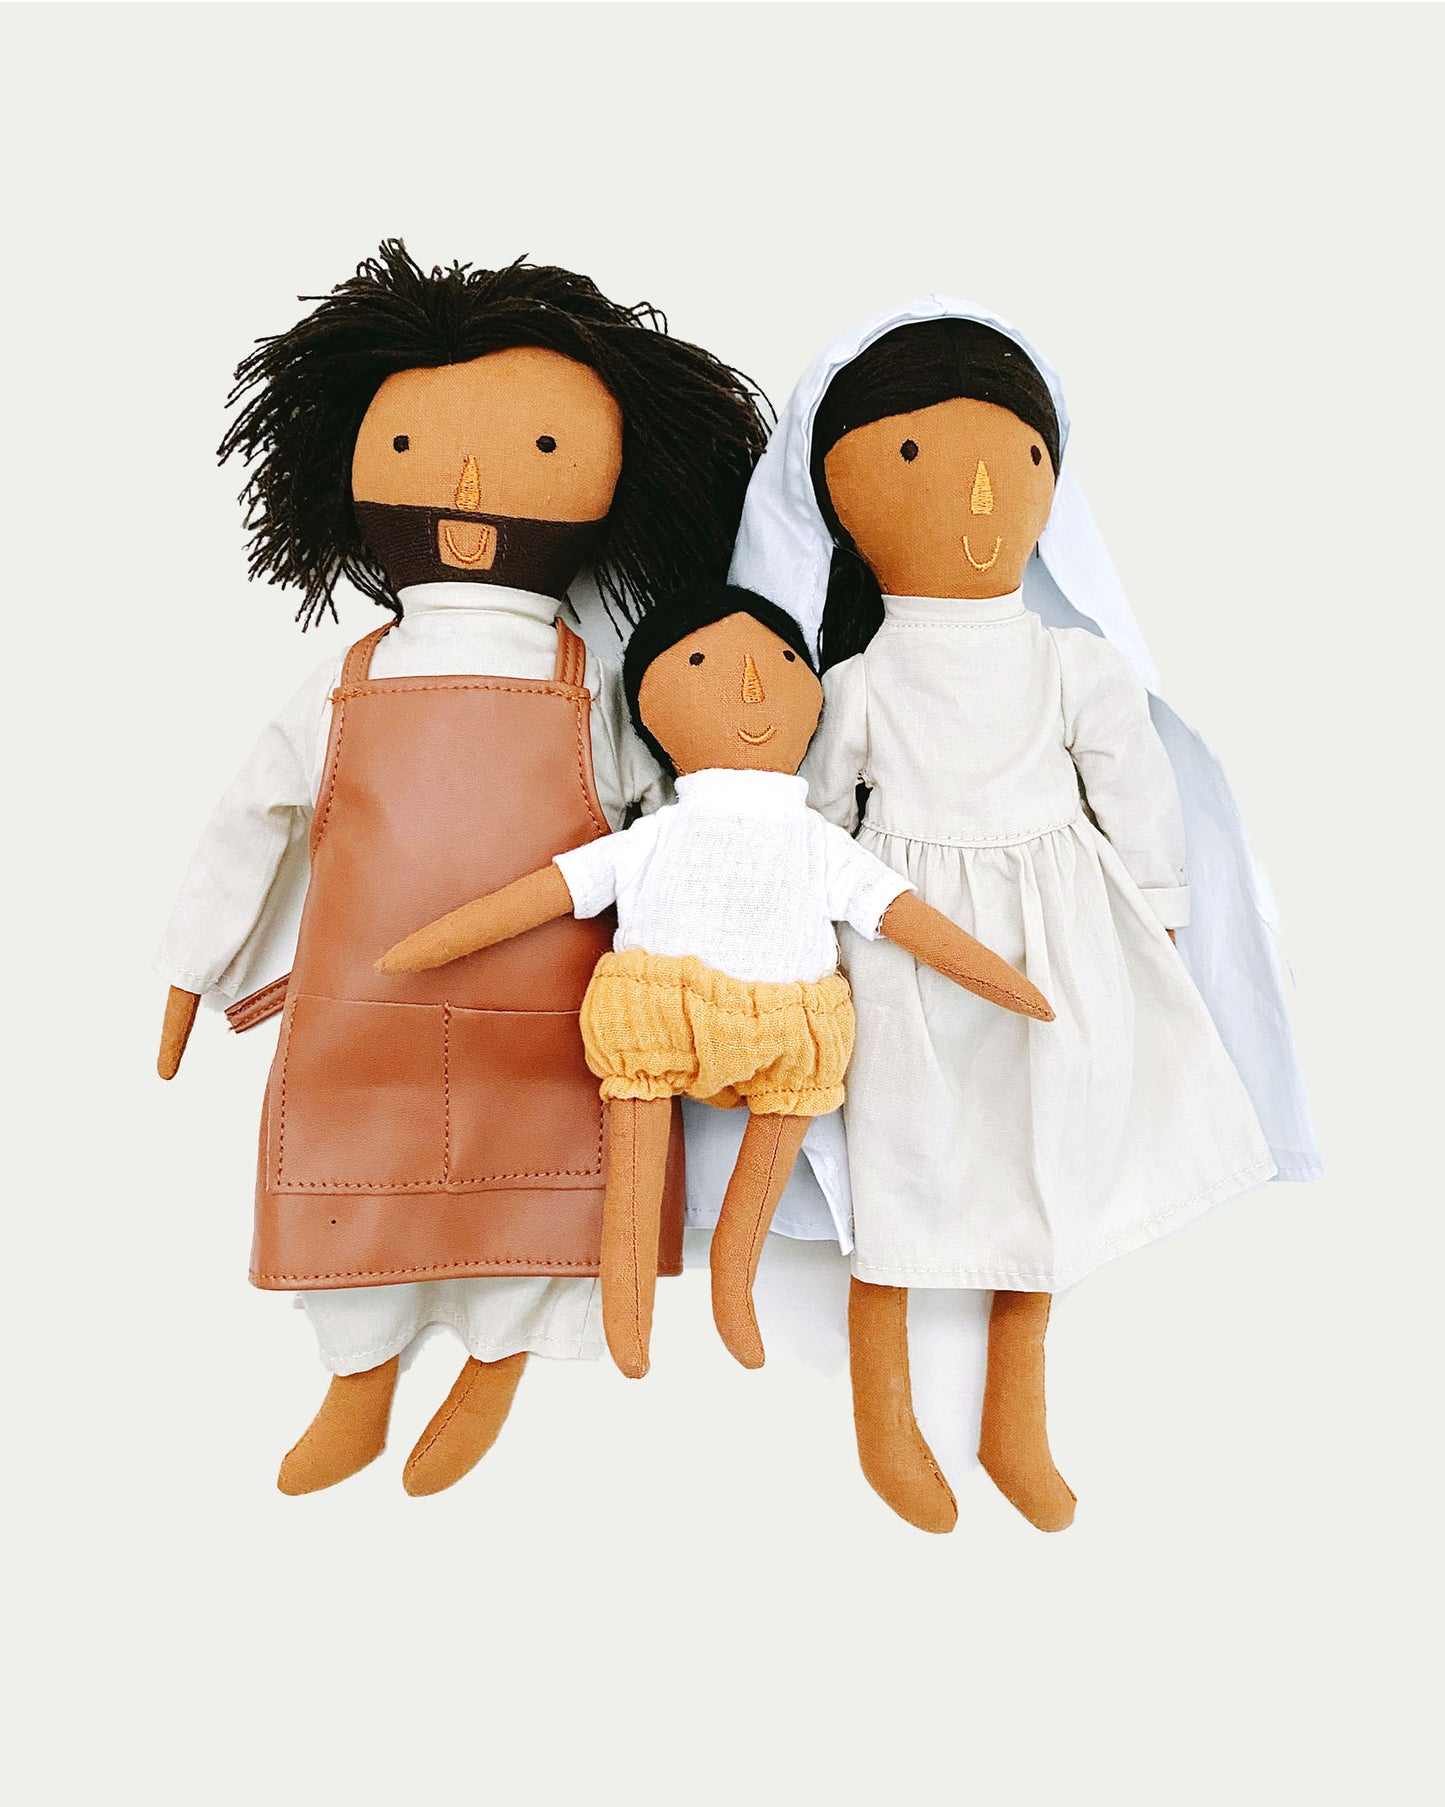 alt="Holy Family Doll Bundle gift for kids"